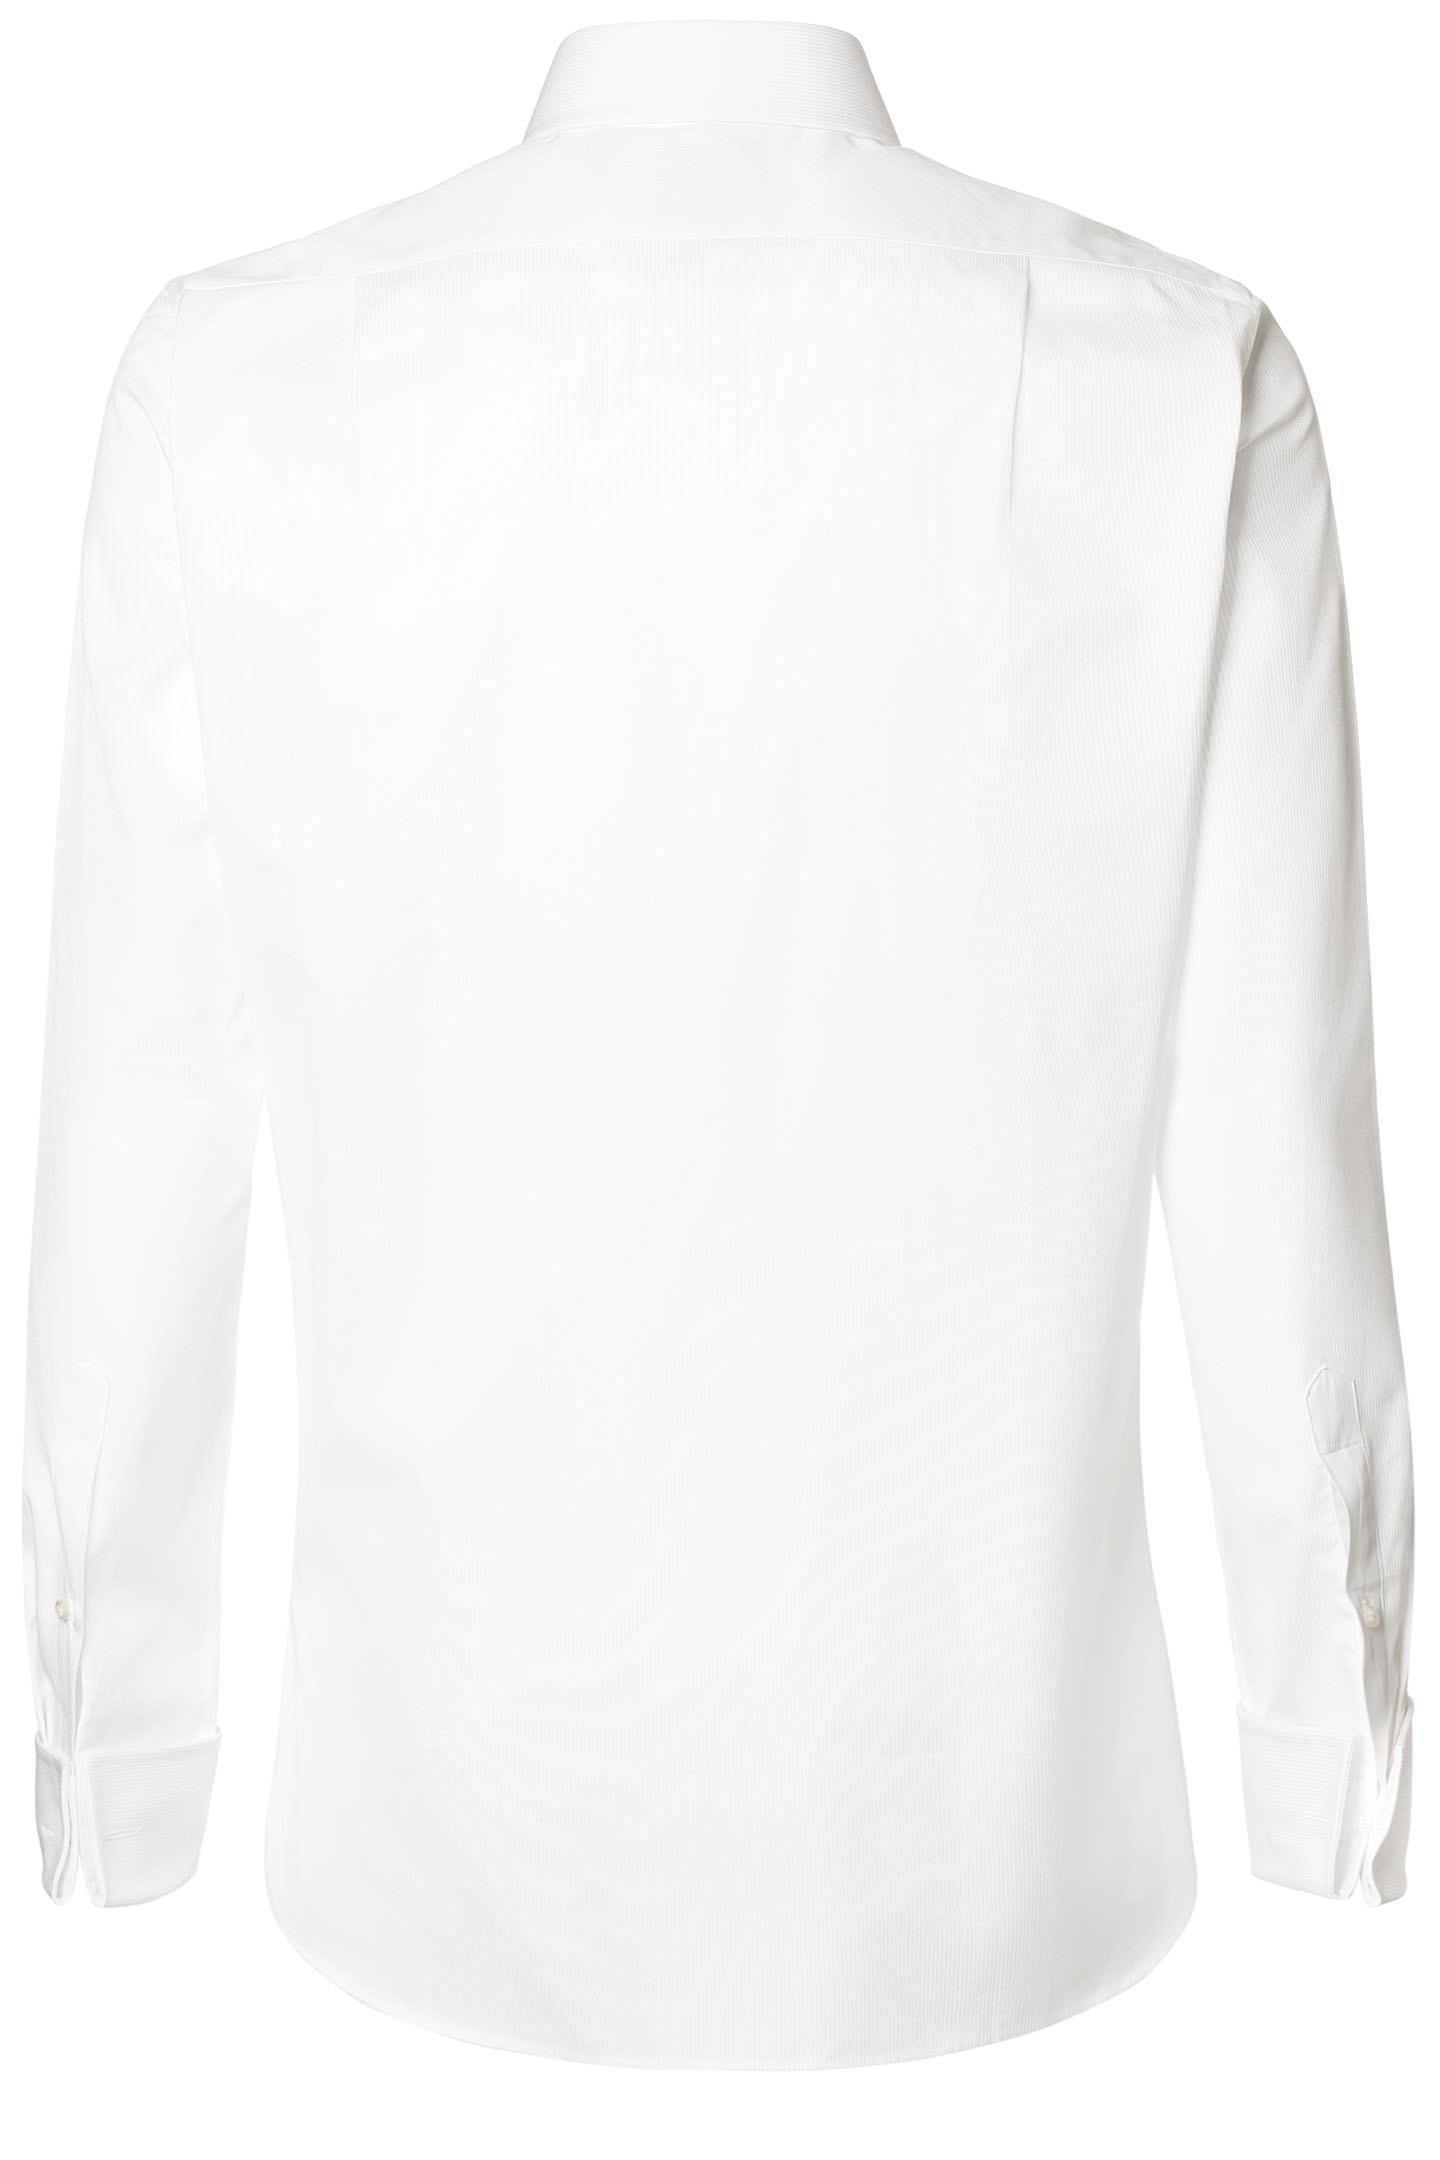 Boggi Milano - White Tuxedo Shirt